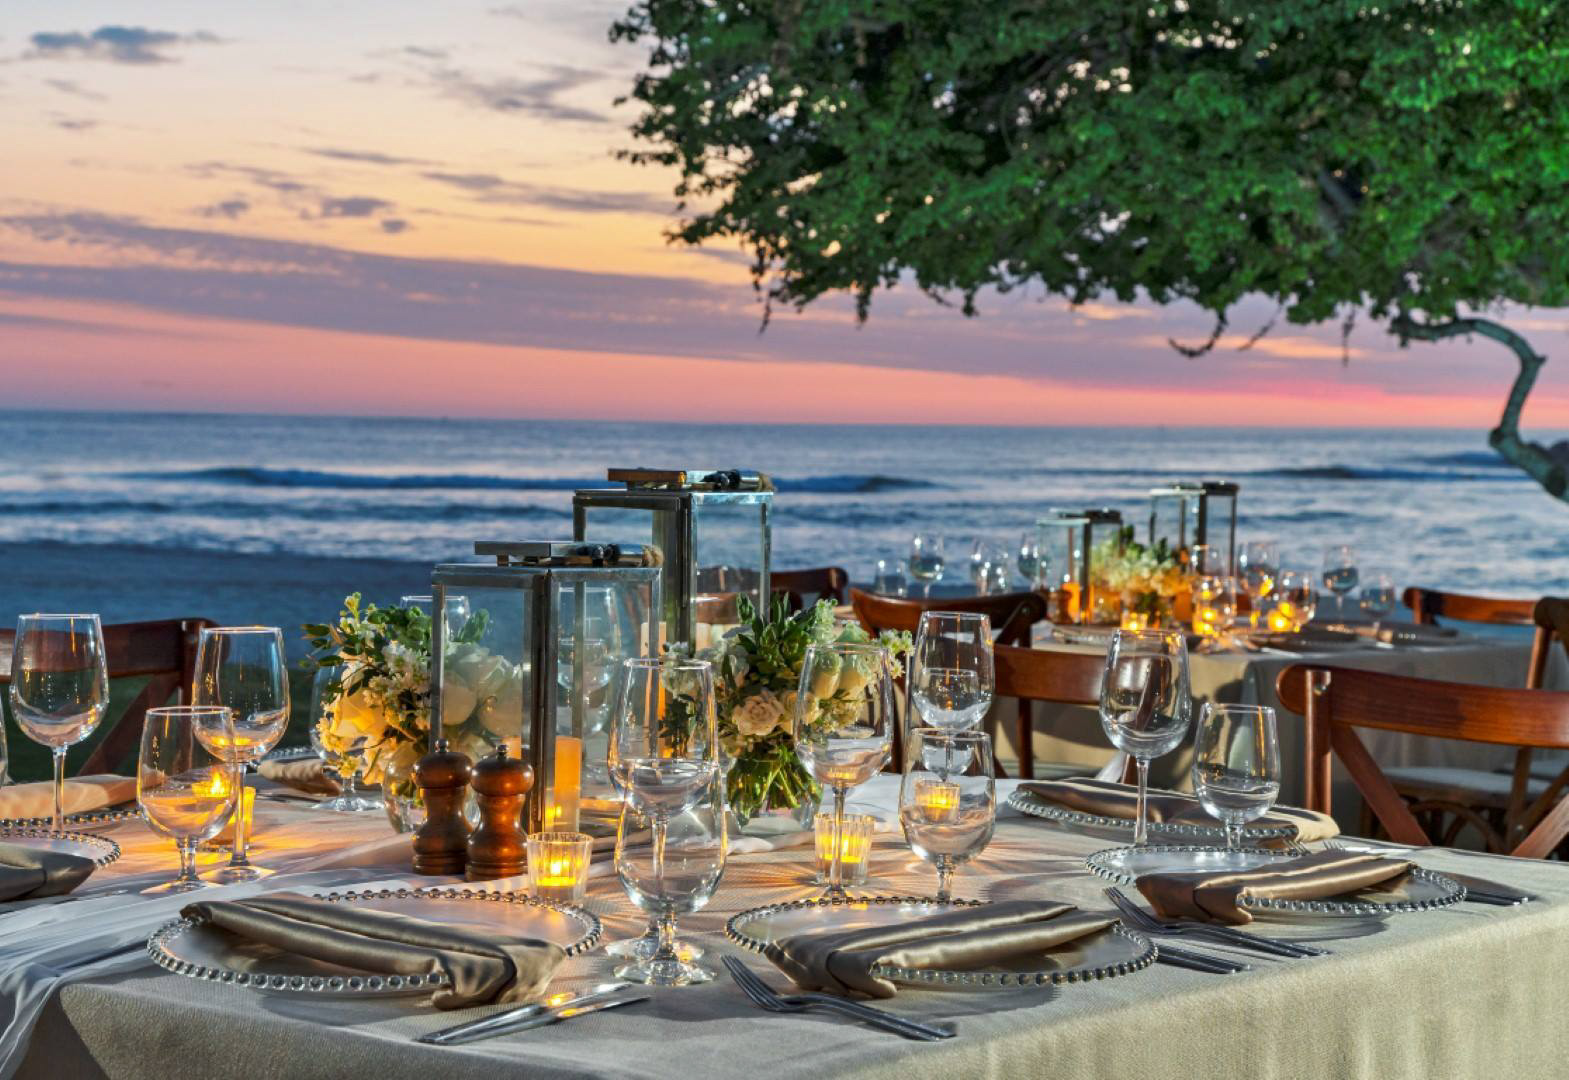 The St. Regis Punta Mita Resort – Nayarit, Mexico – Beachfront Dining at Sunset